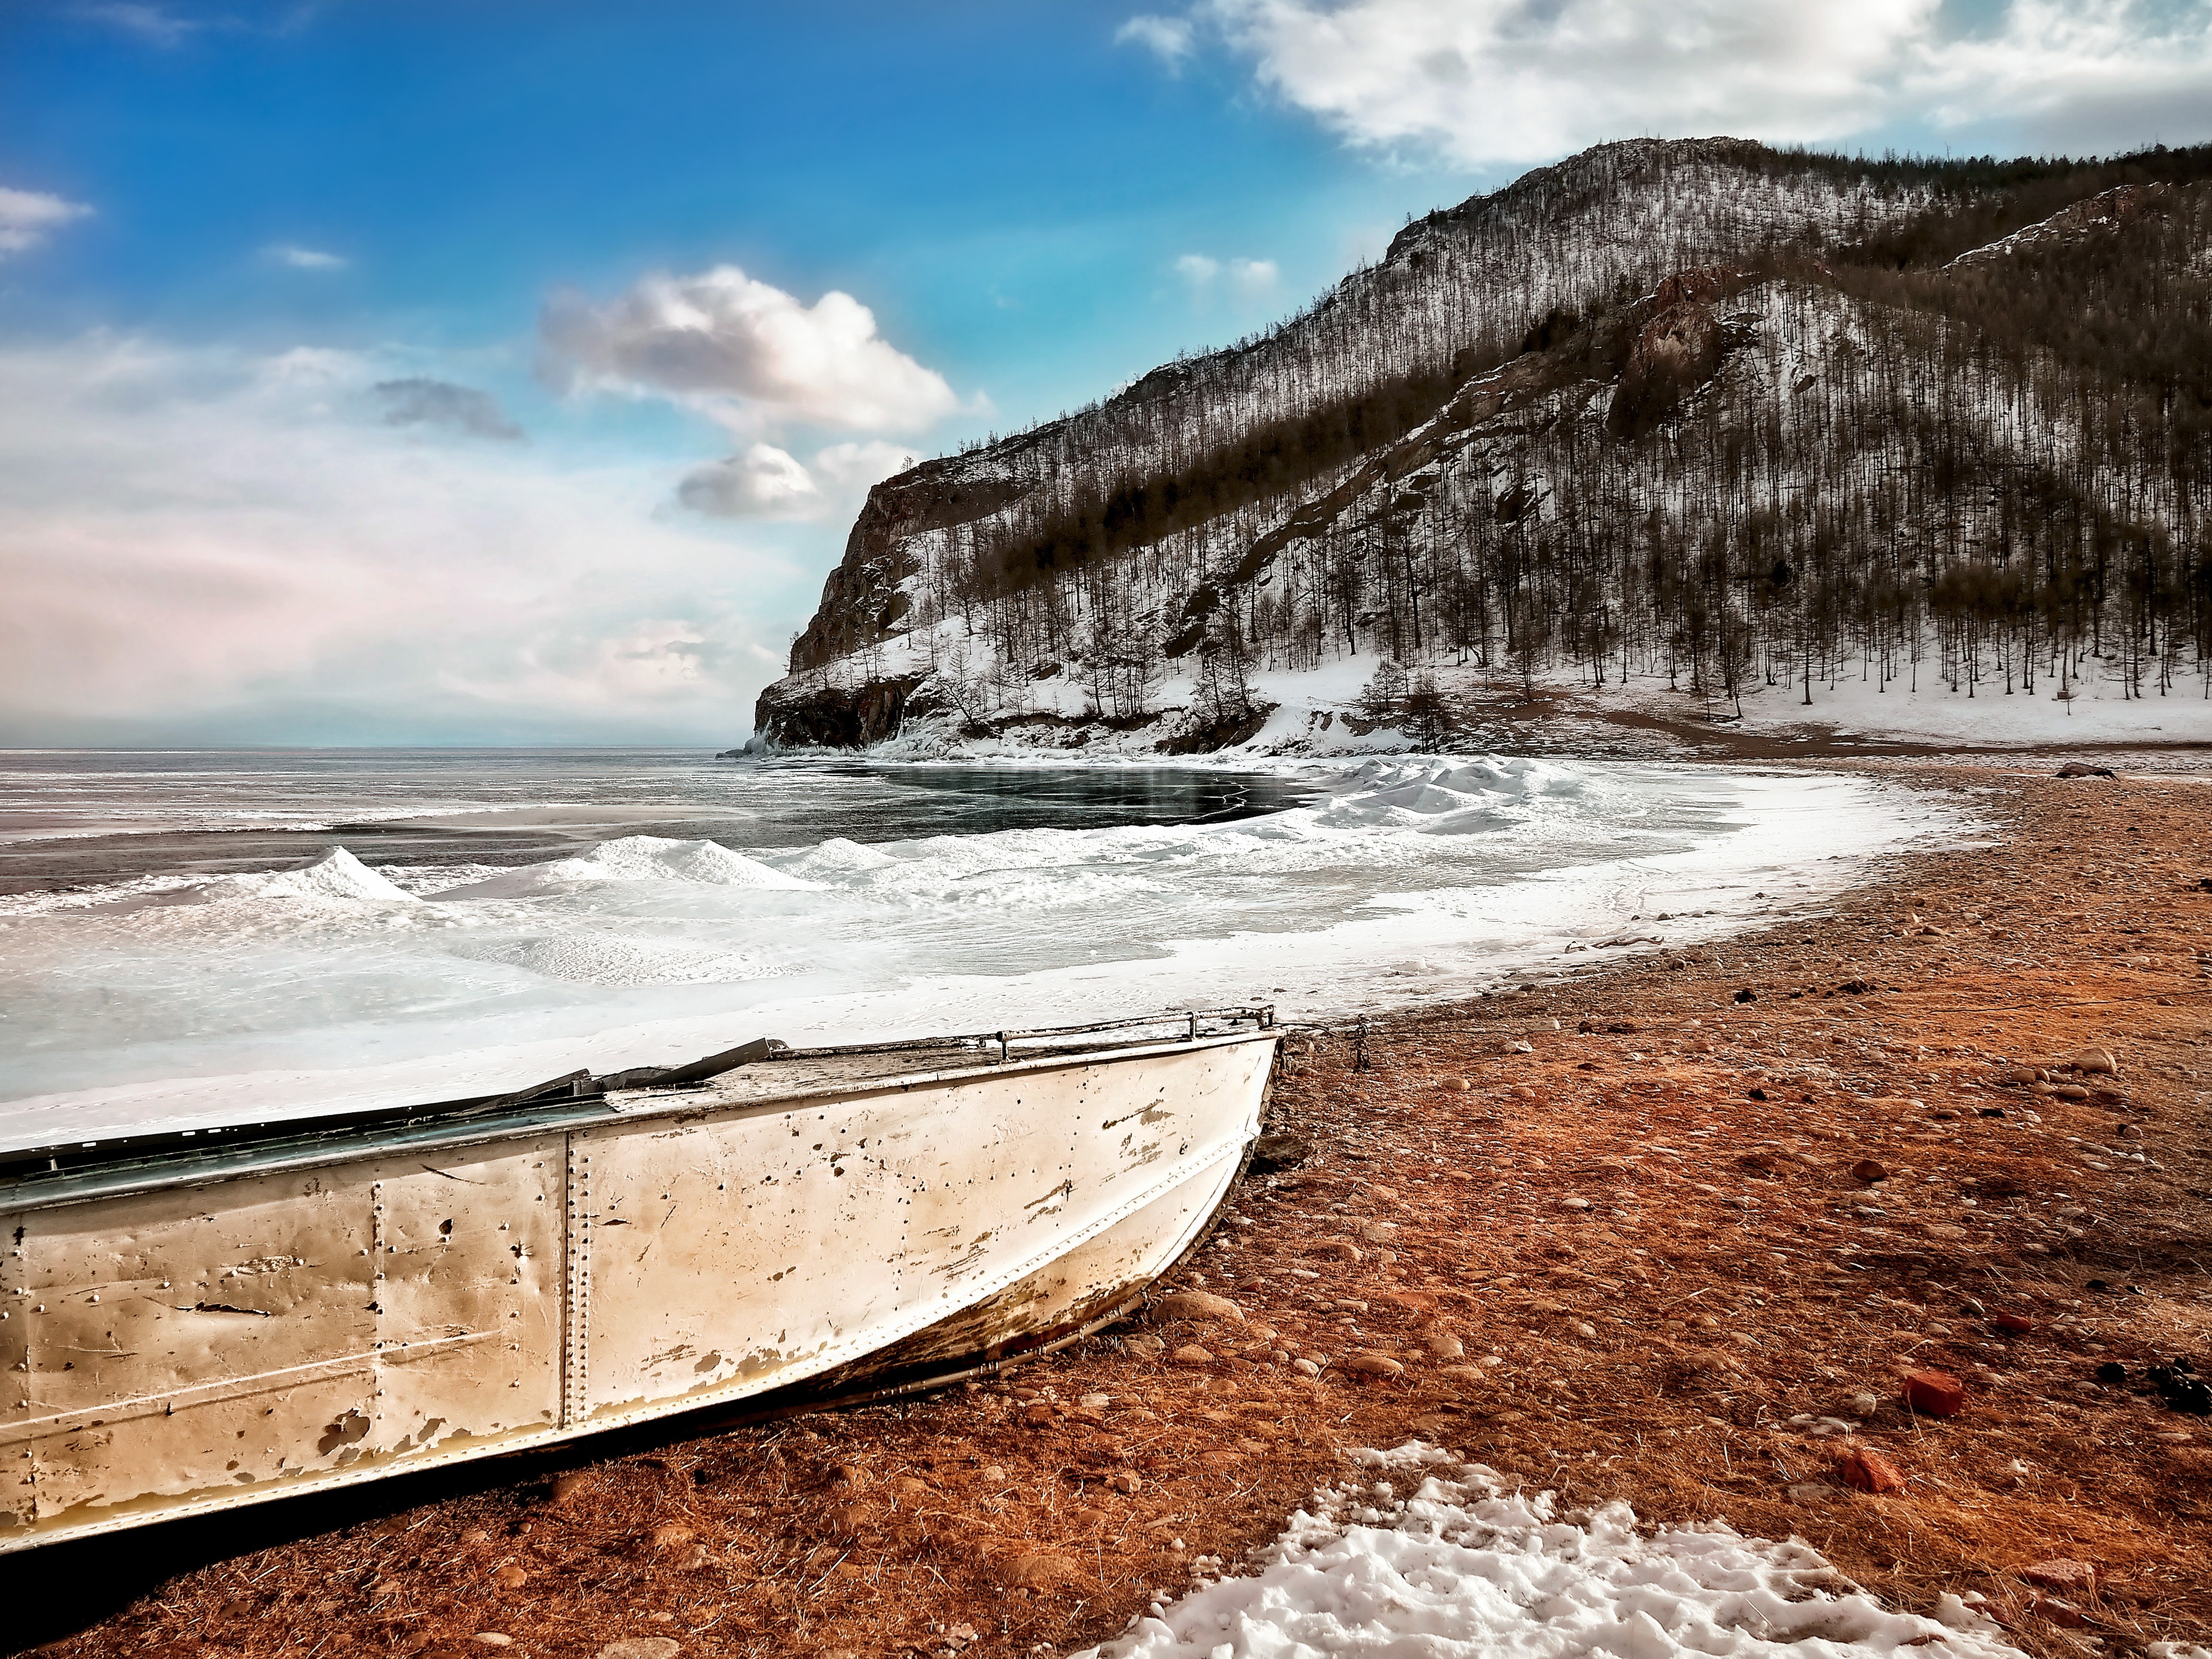 White Boat on Seashore Near Mountain Under White and Blue Sky, Barren, Sea, Winter, Waves breaking, HQ Photo